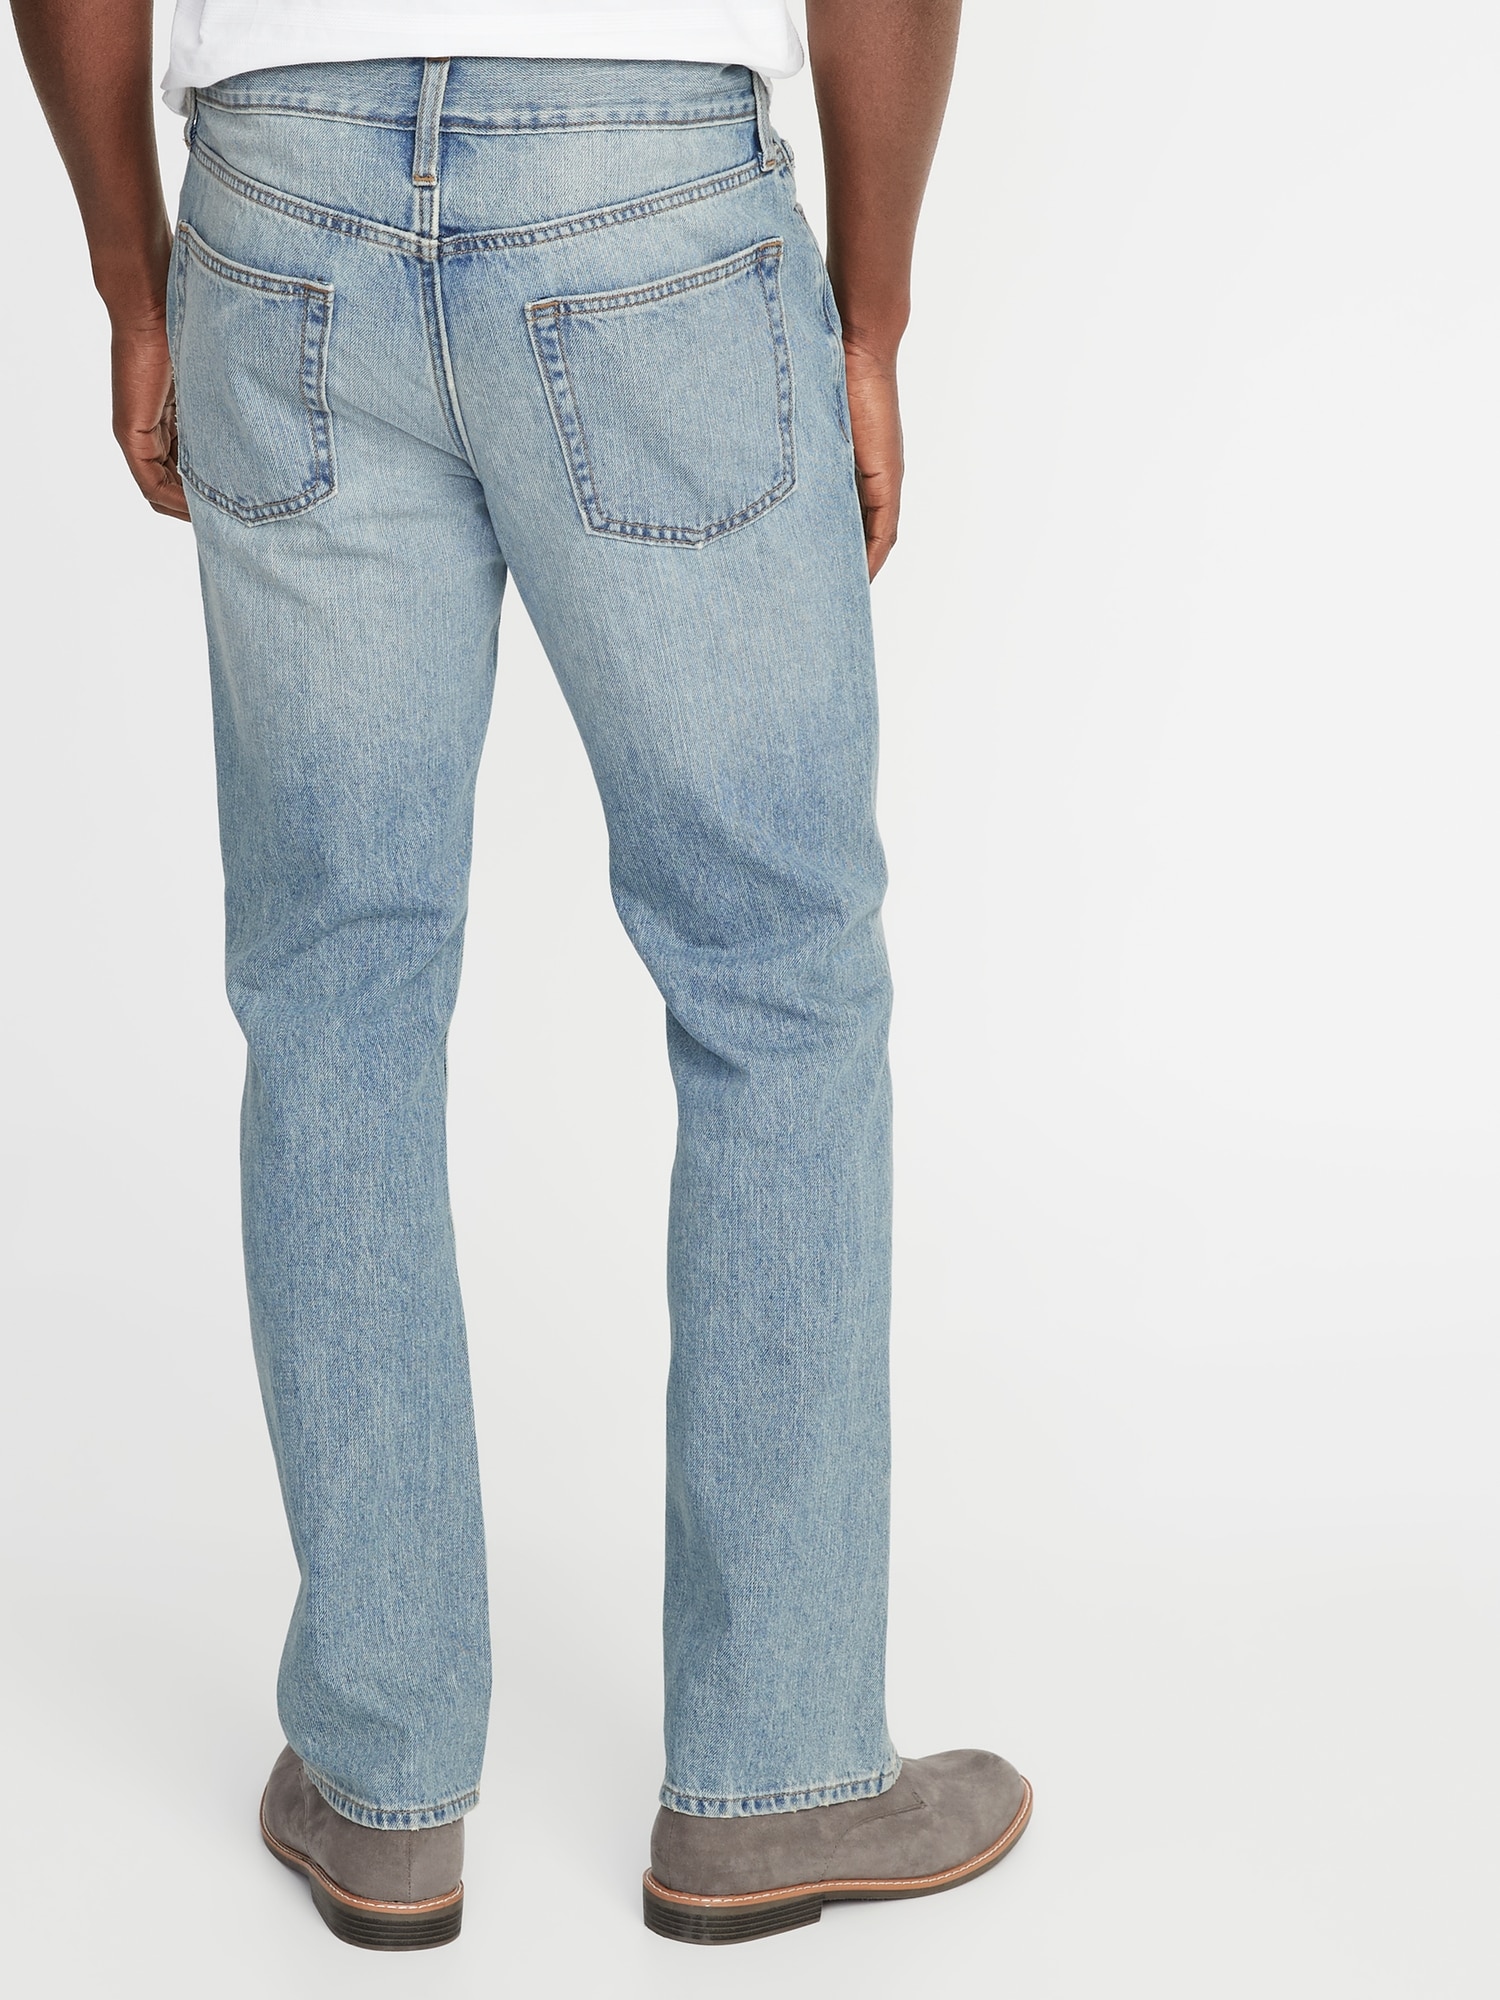 gap men's boot cut jeans